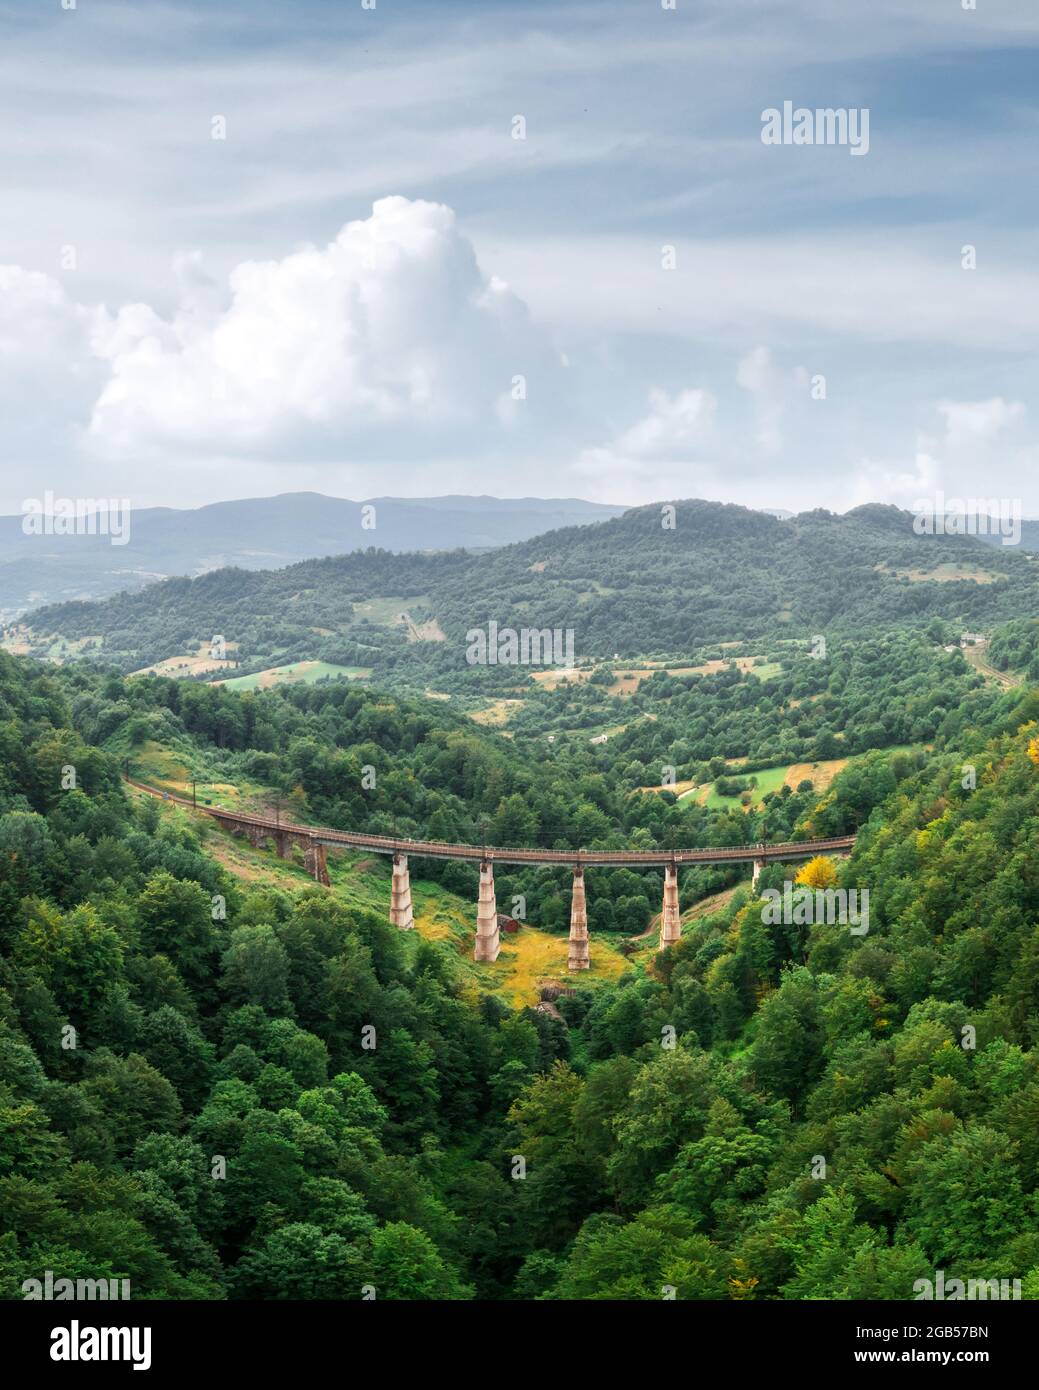 Old railway bridge in lush summer forest in Carpathians mountains, Ukraine. Landscape photography Stock Photo